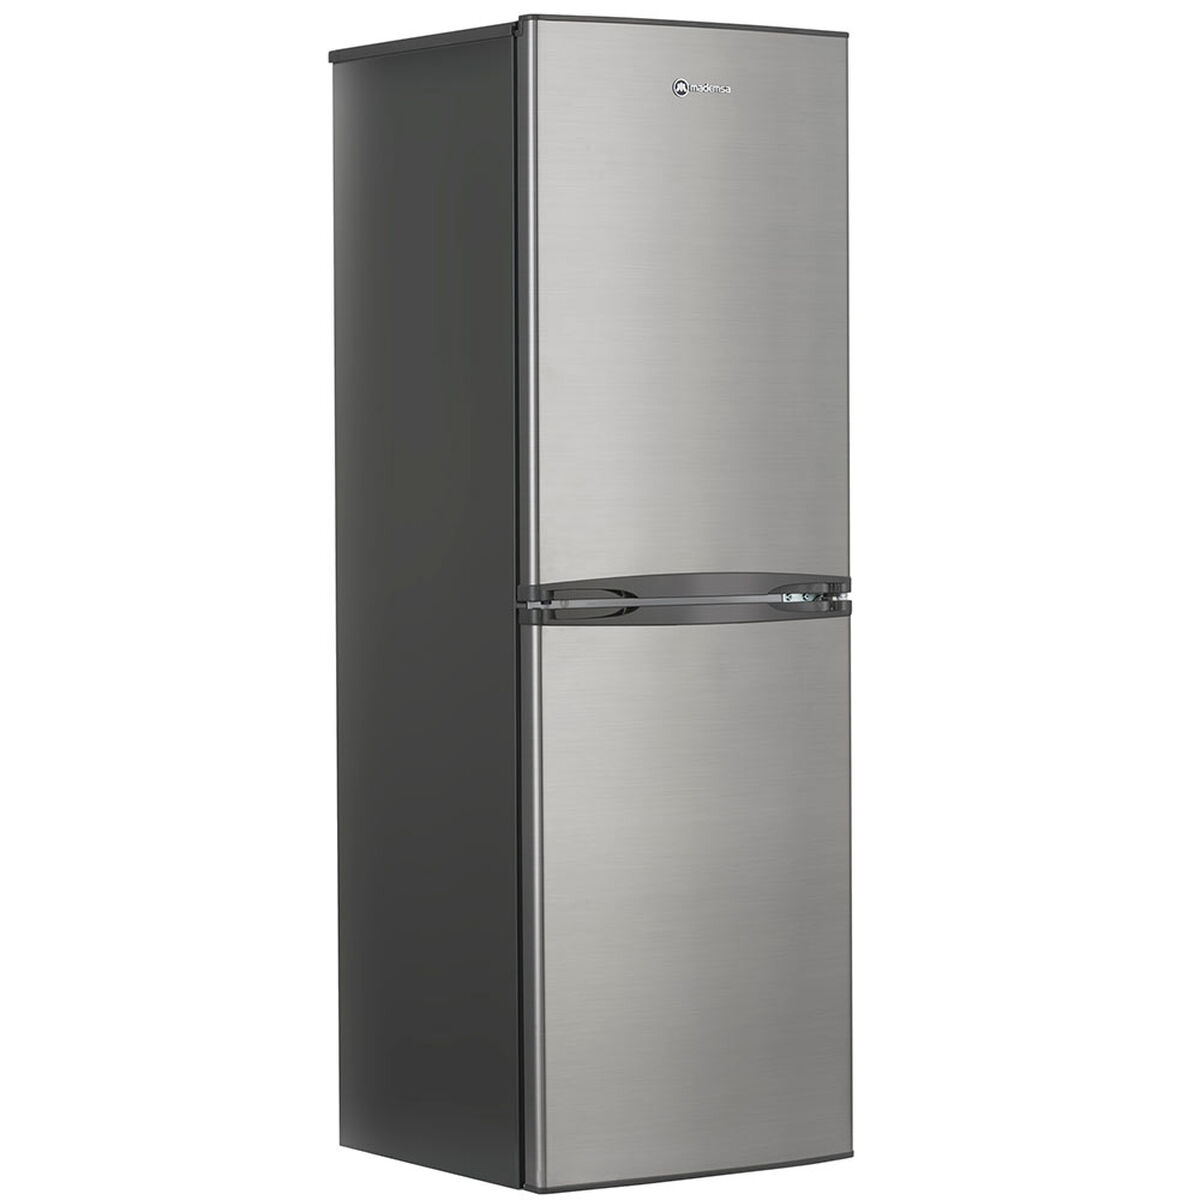 Refrigerador Combi Frío Directo Mademsa Nordik 415 231 lts.